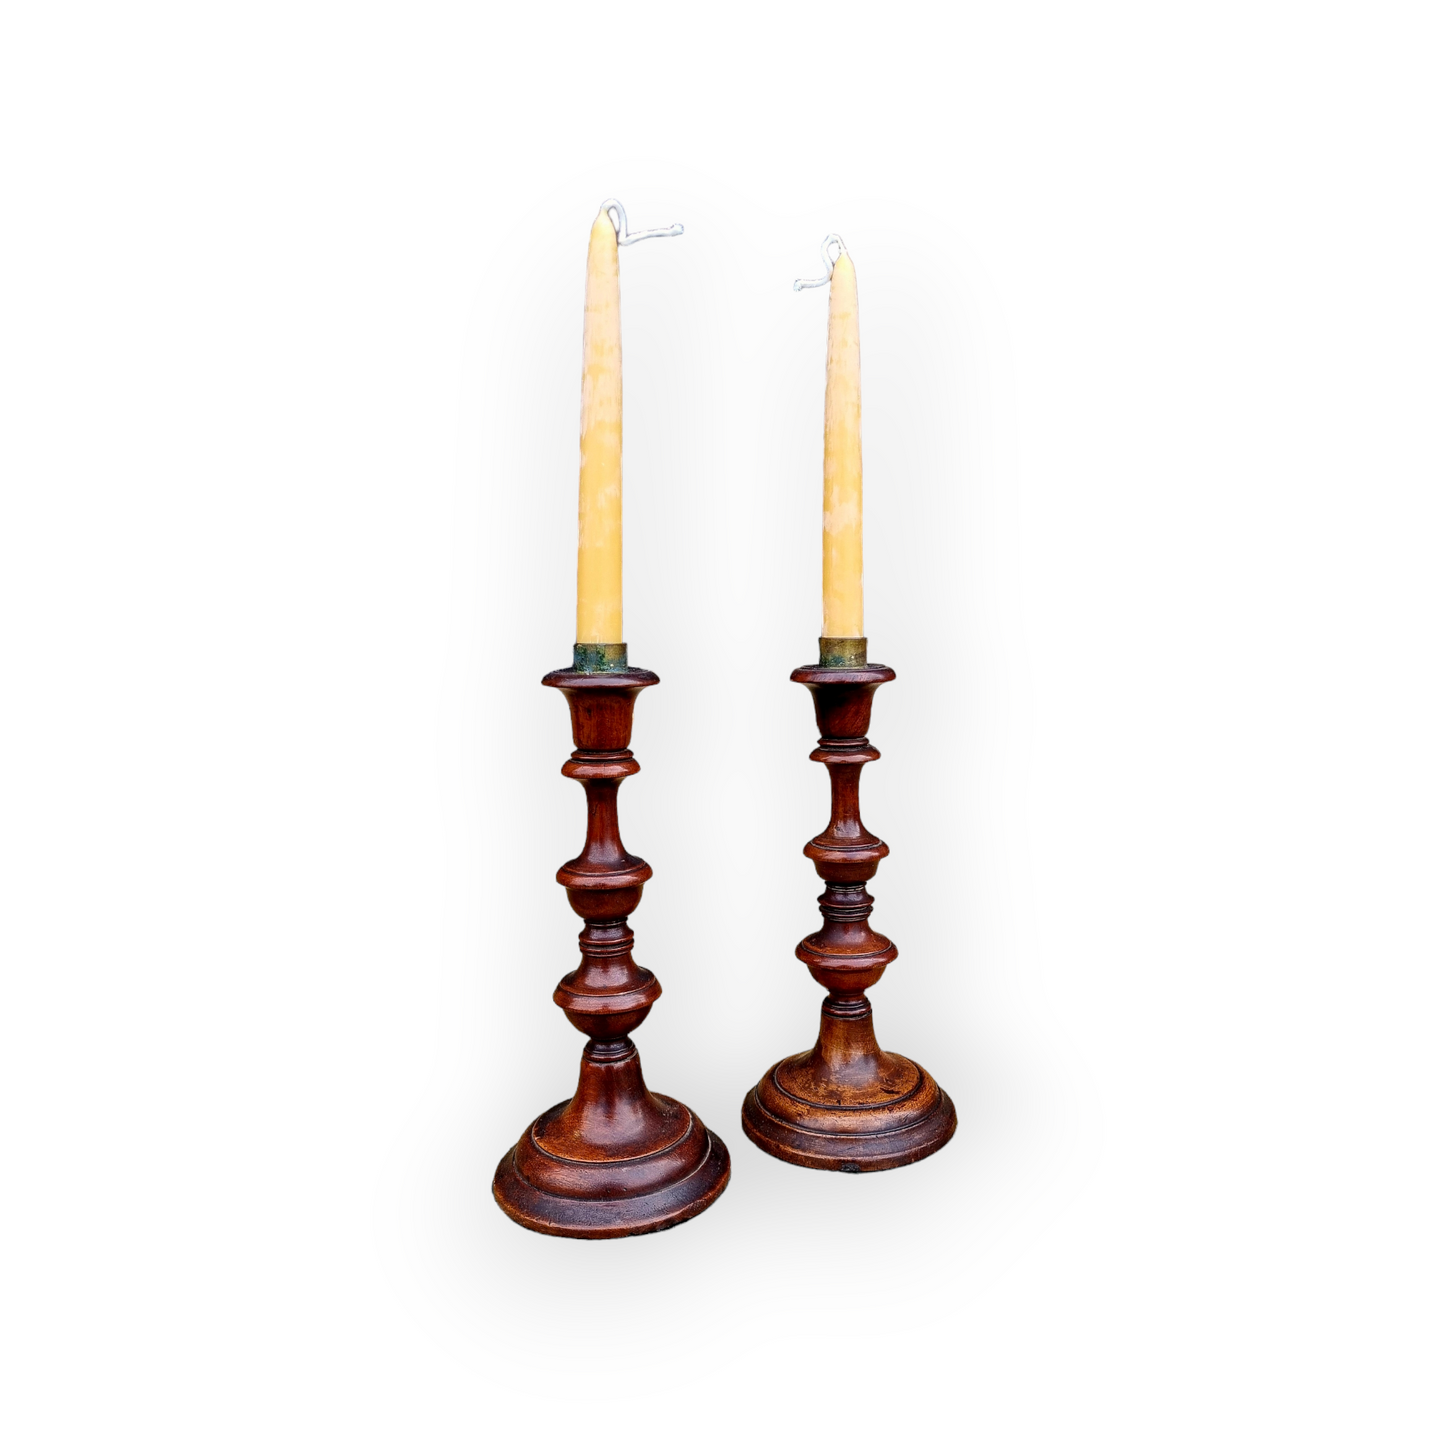 Pair of Mid-19th Century English Antique Treen Candlesticks